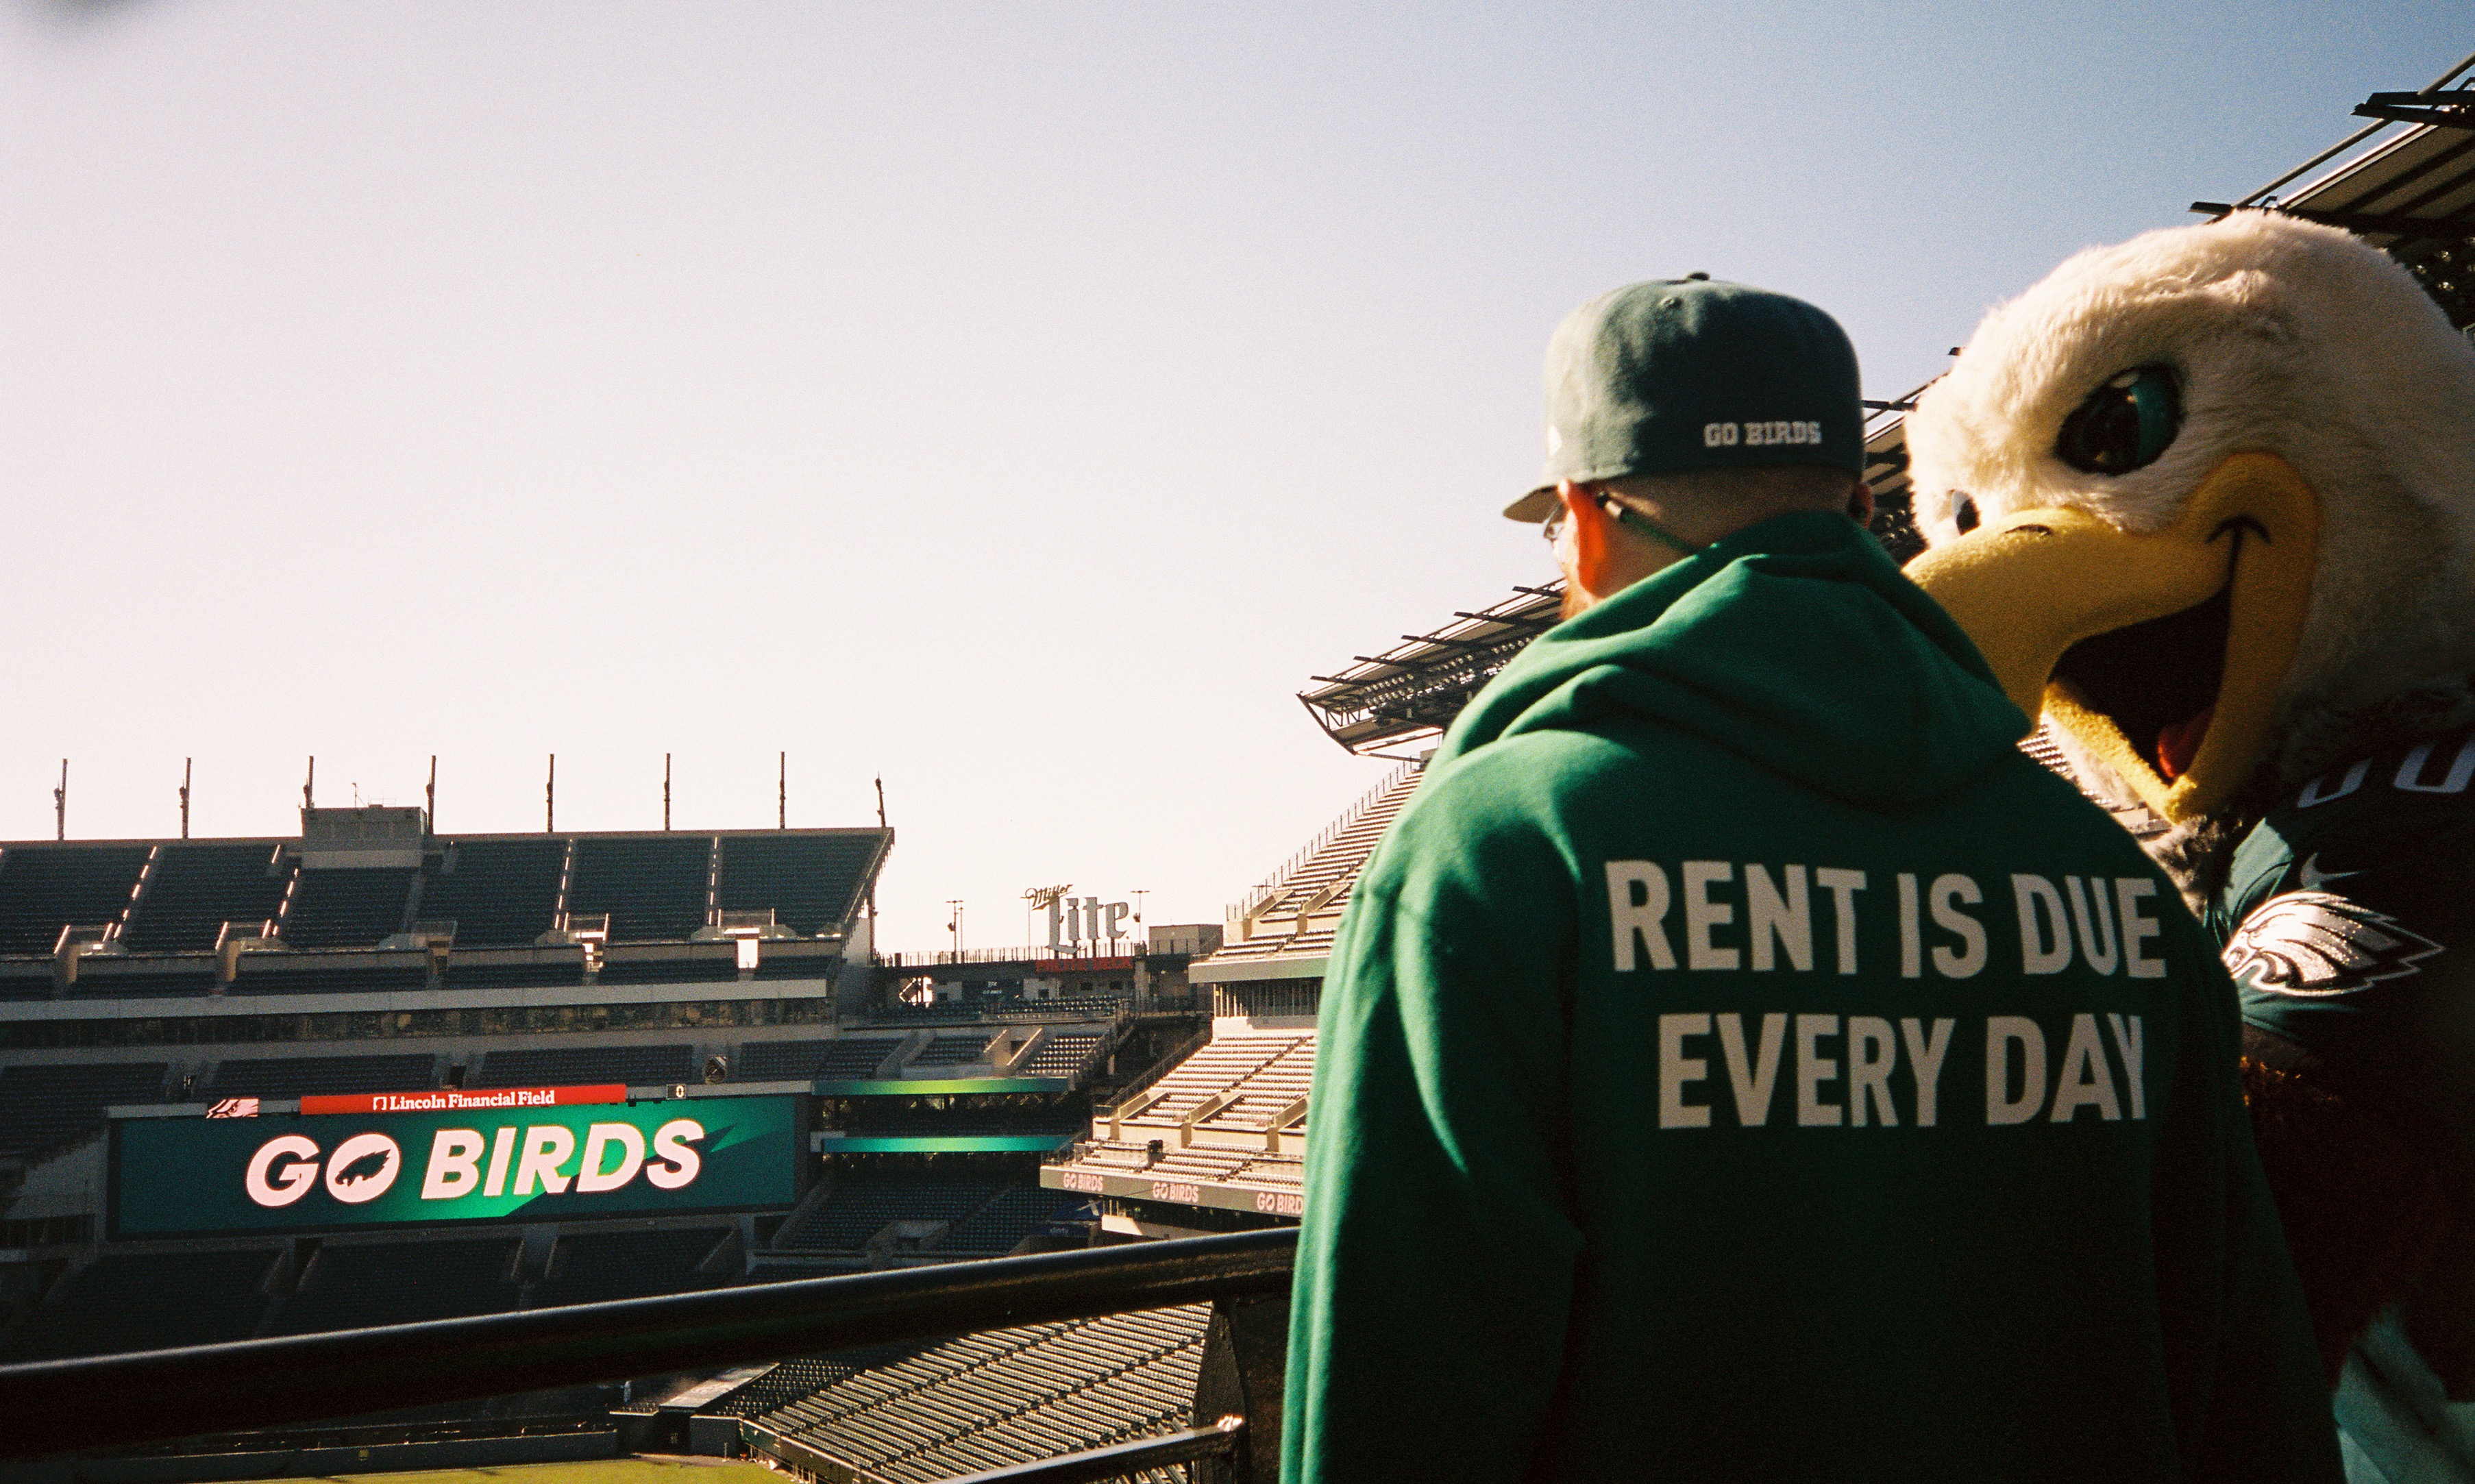 Guy in "rent is due everyday" sweatshirt with Eagles mascot Swoop.